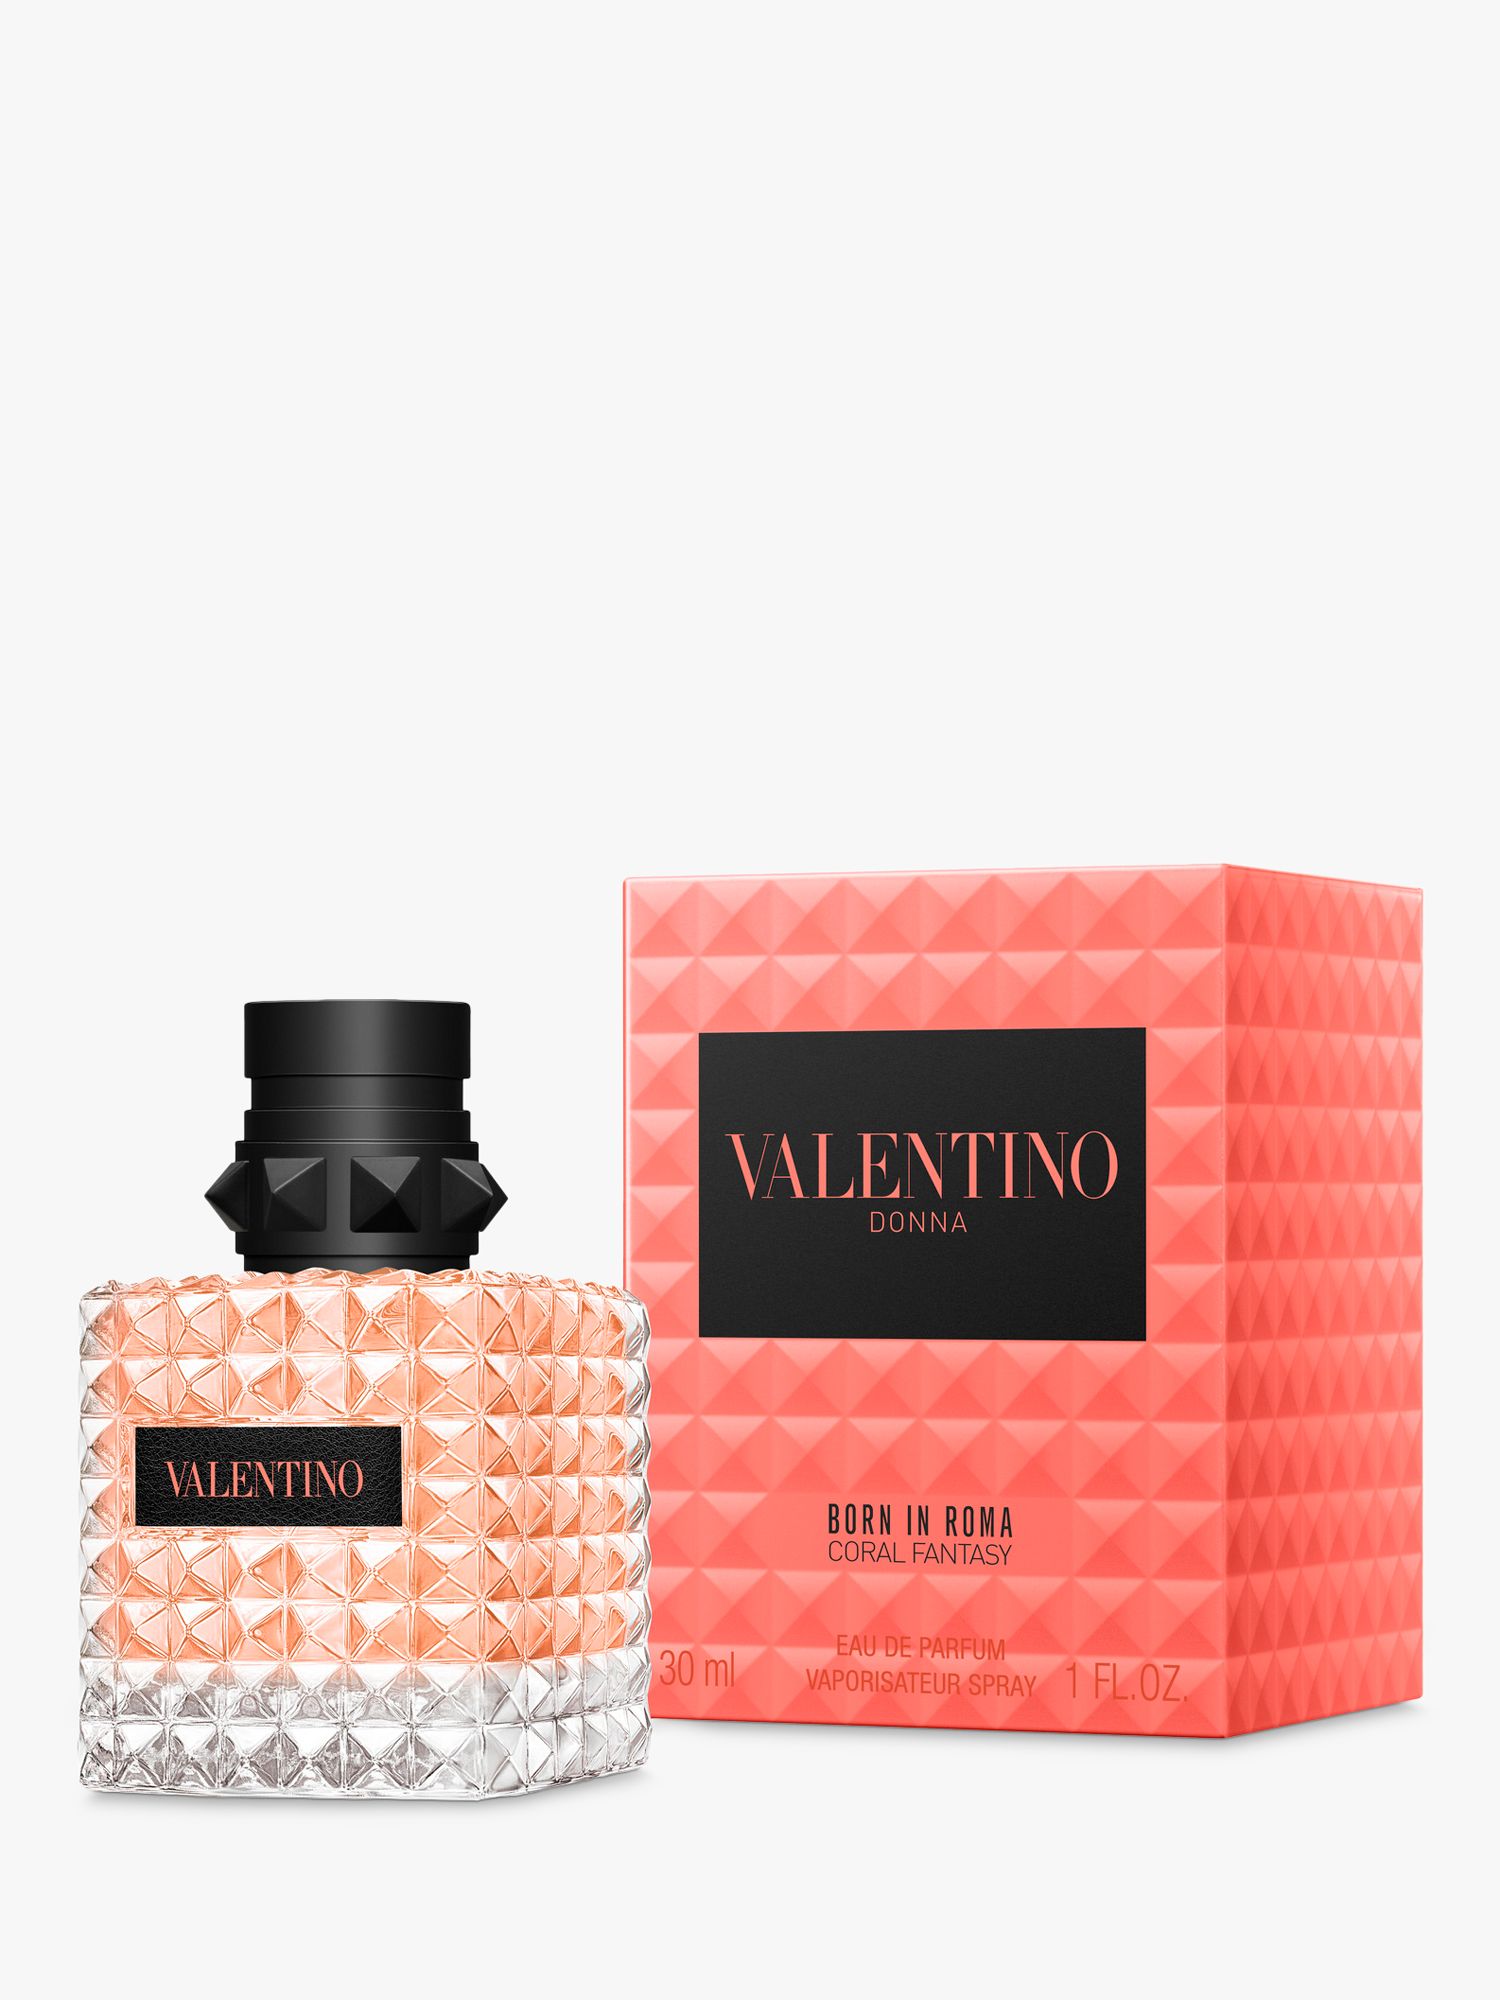 Valentino Born In Roma Coral Fantasy Eau de Parfum, 30ml 2